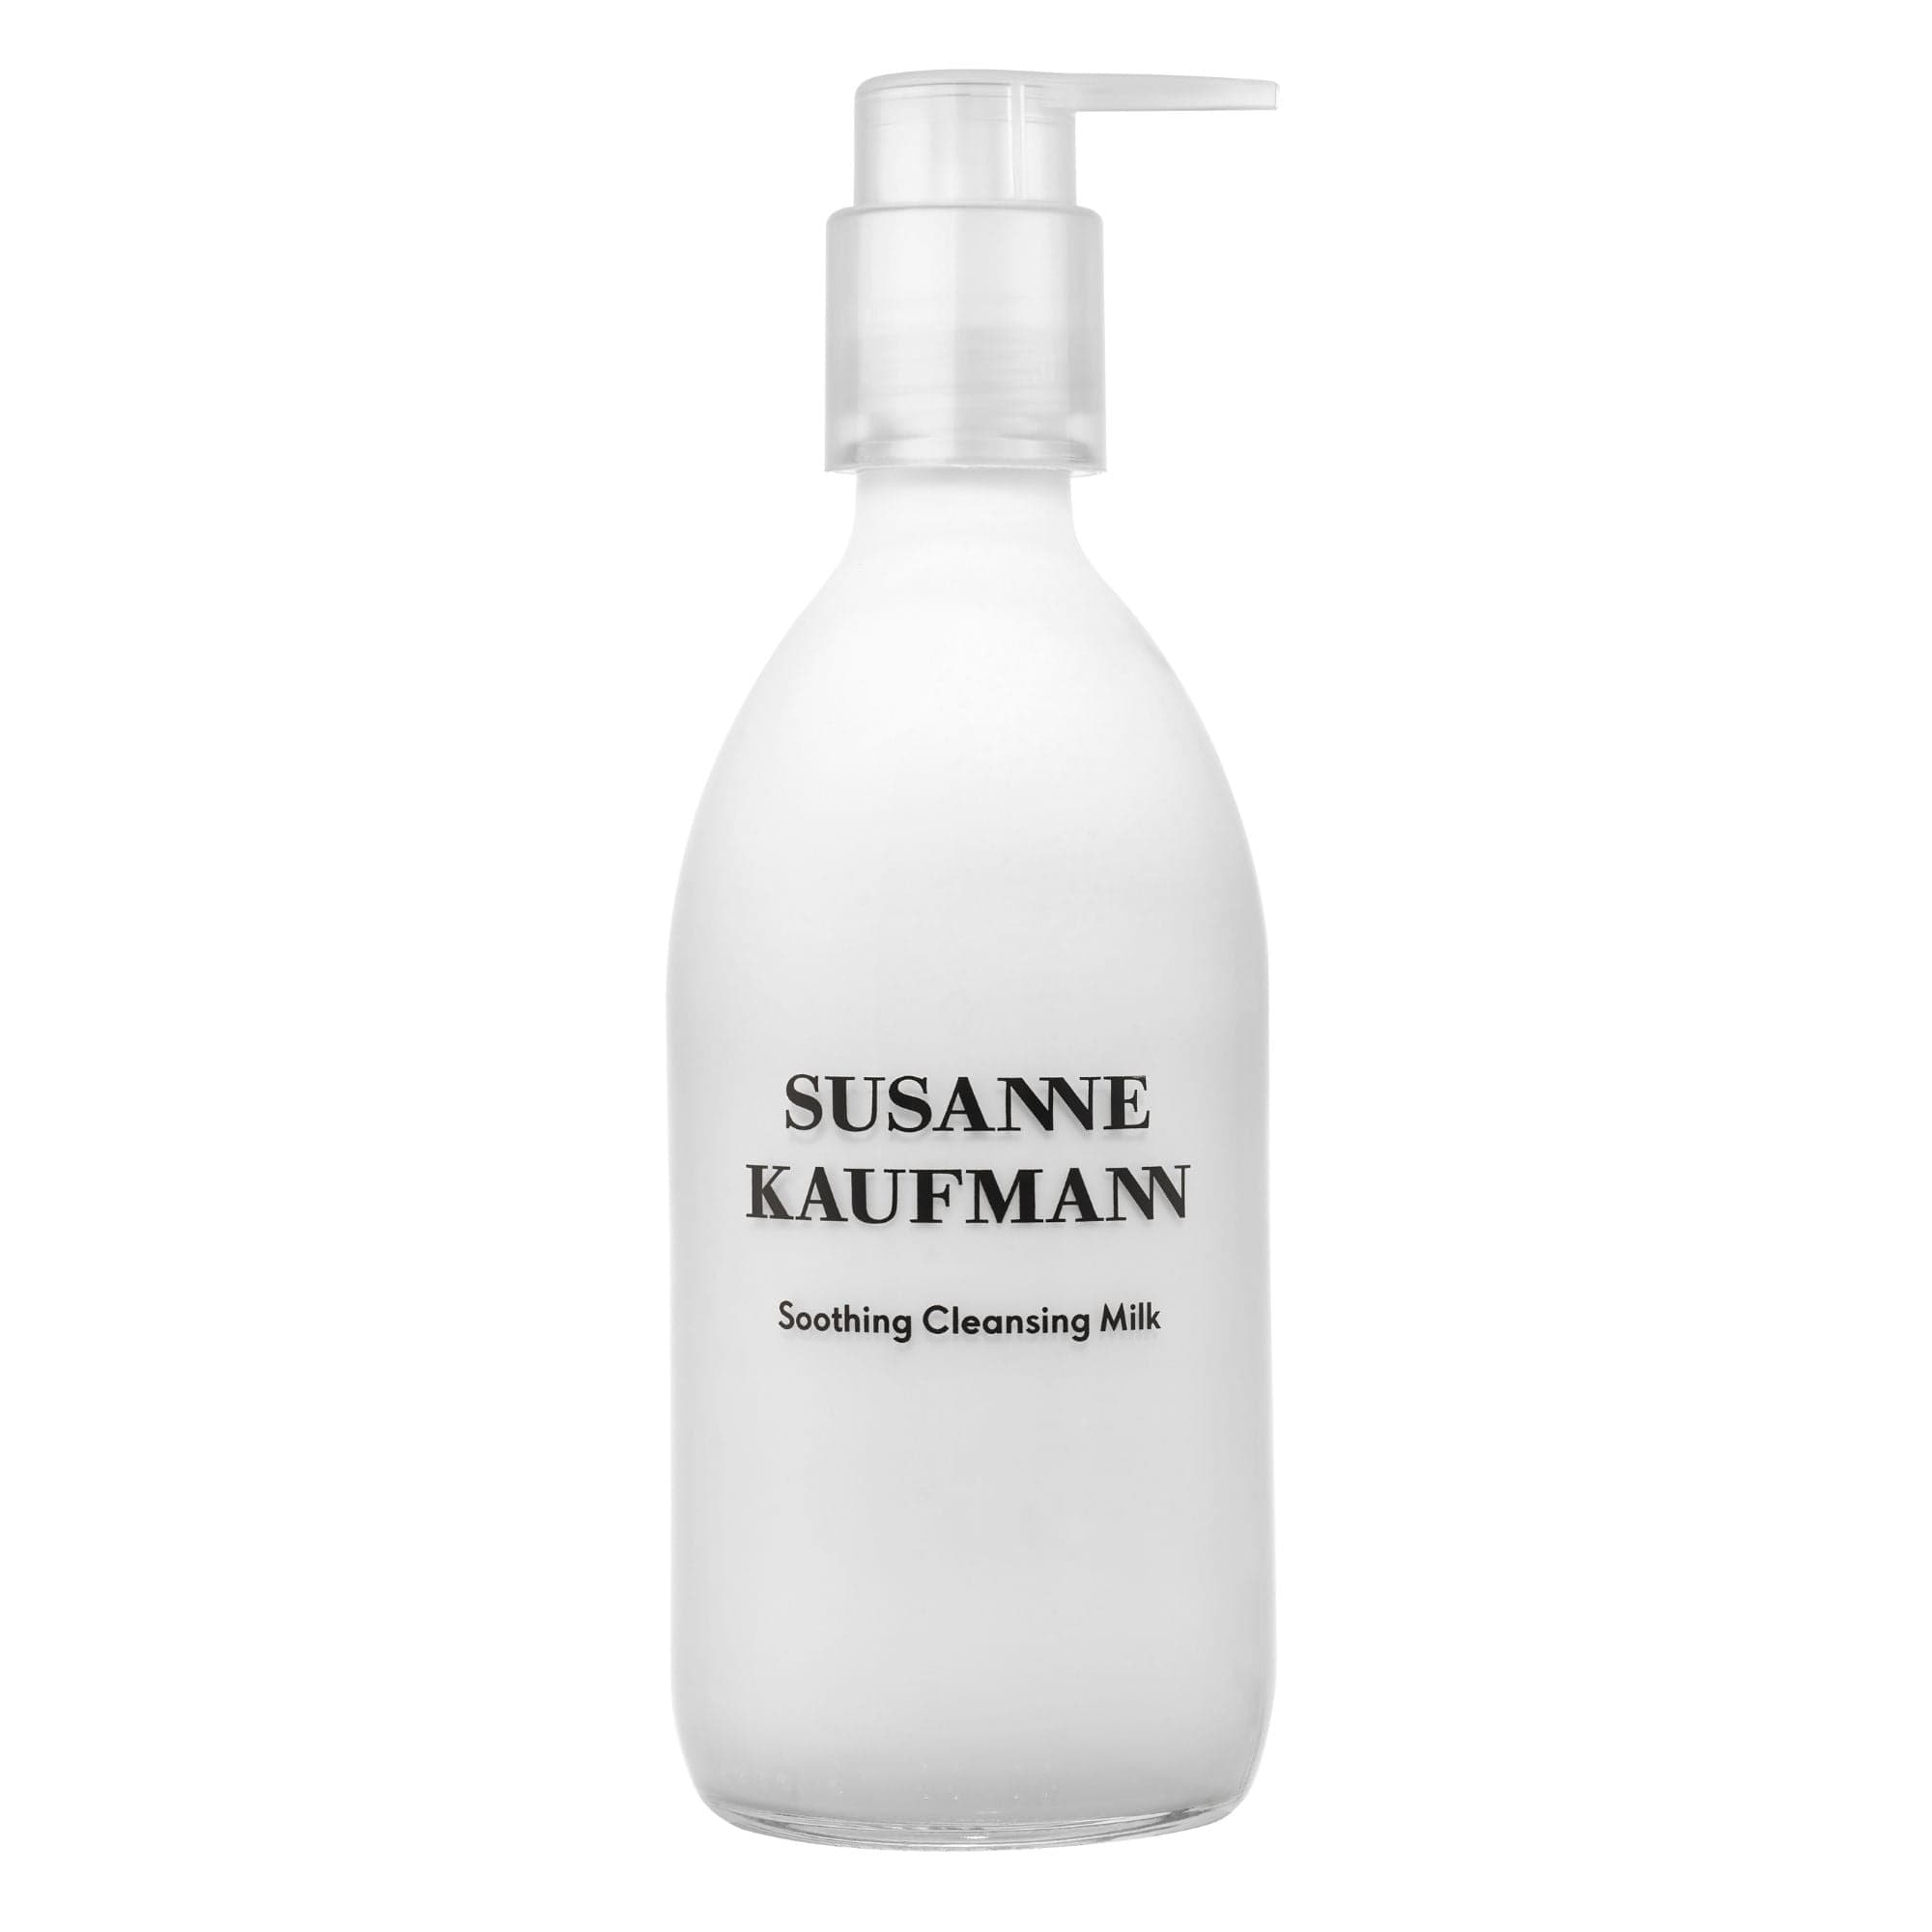 Soothing Cleansing Milk Susanne Kaufmann Leche limpiadora calmante